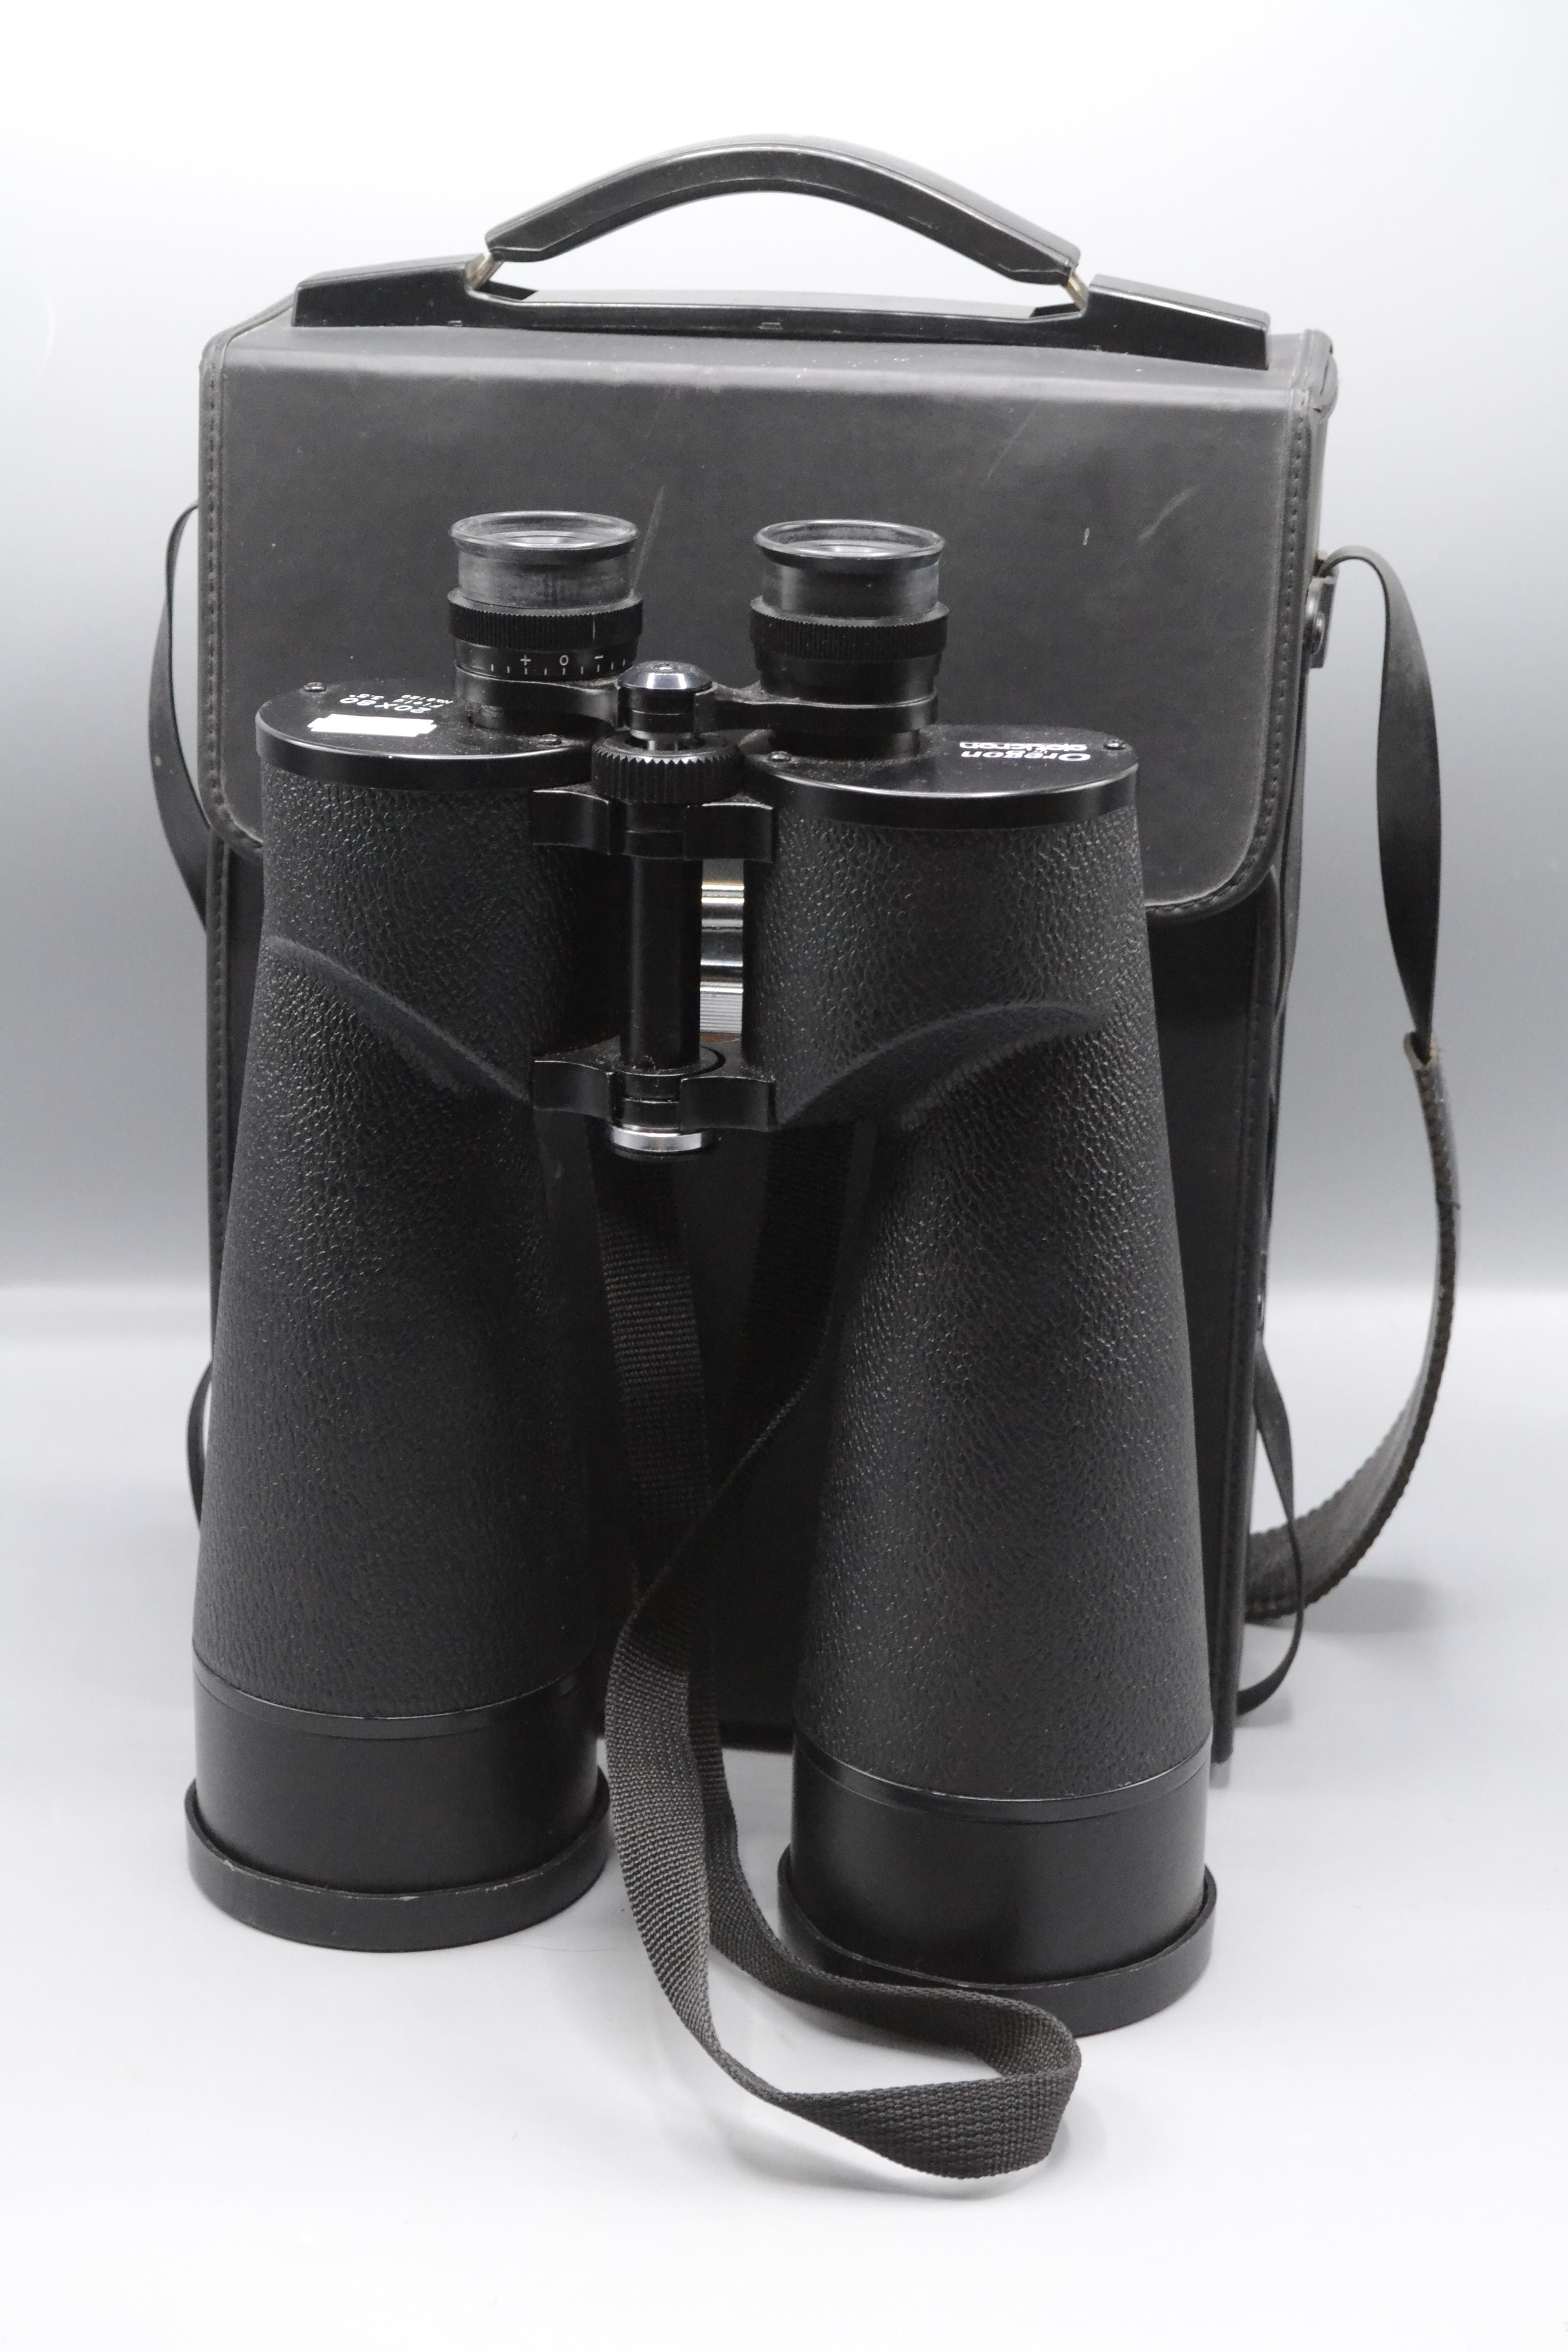 A pair of Oregon by opticron binoculars, 20 x 80 field 3.5 No.8129, height 31cm, width 23cm.